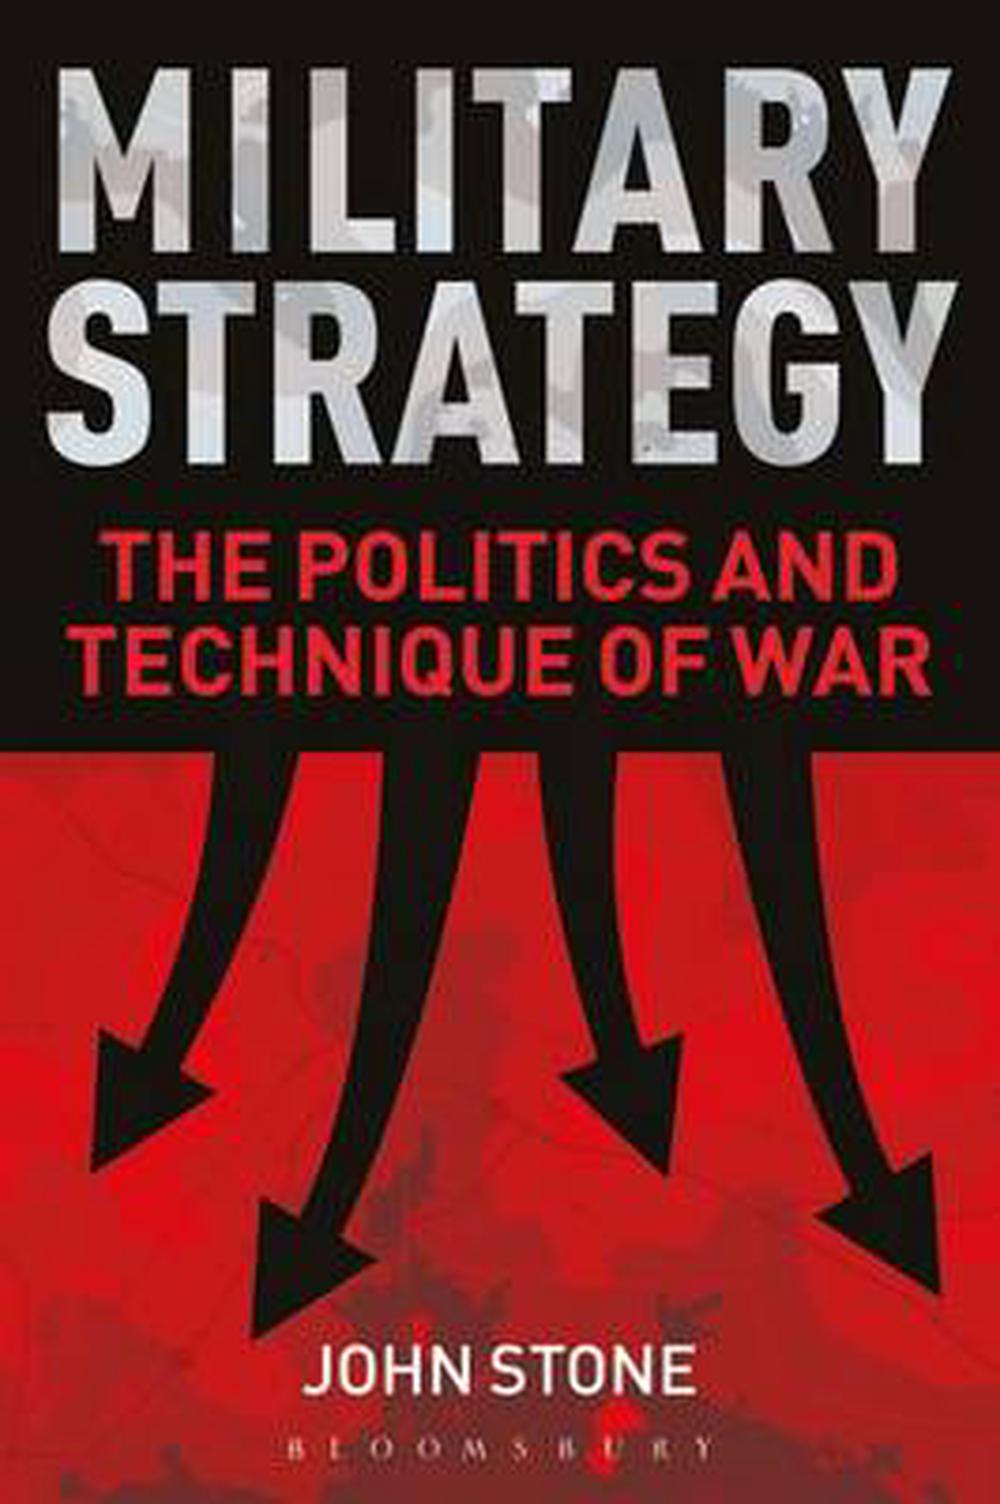 describe strategic war